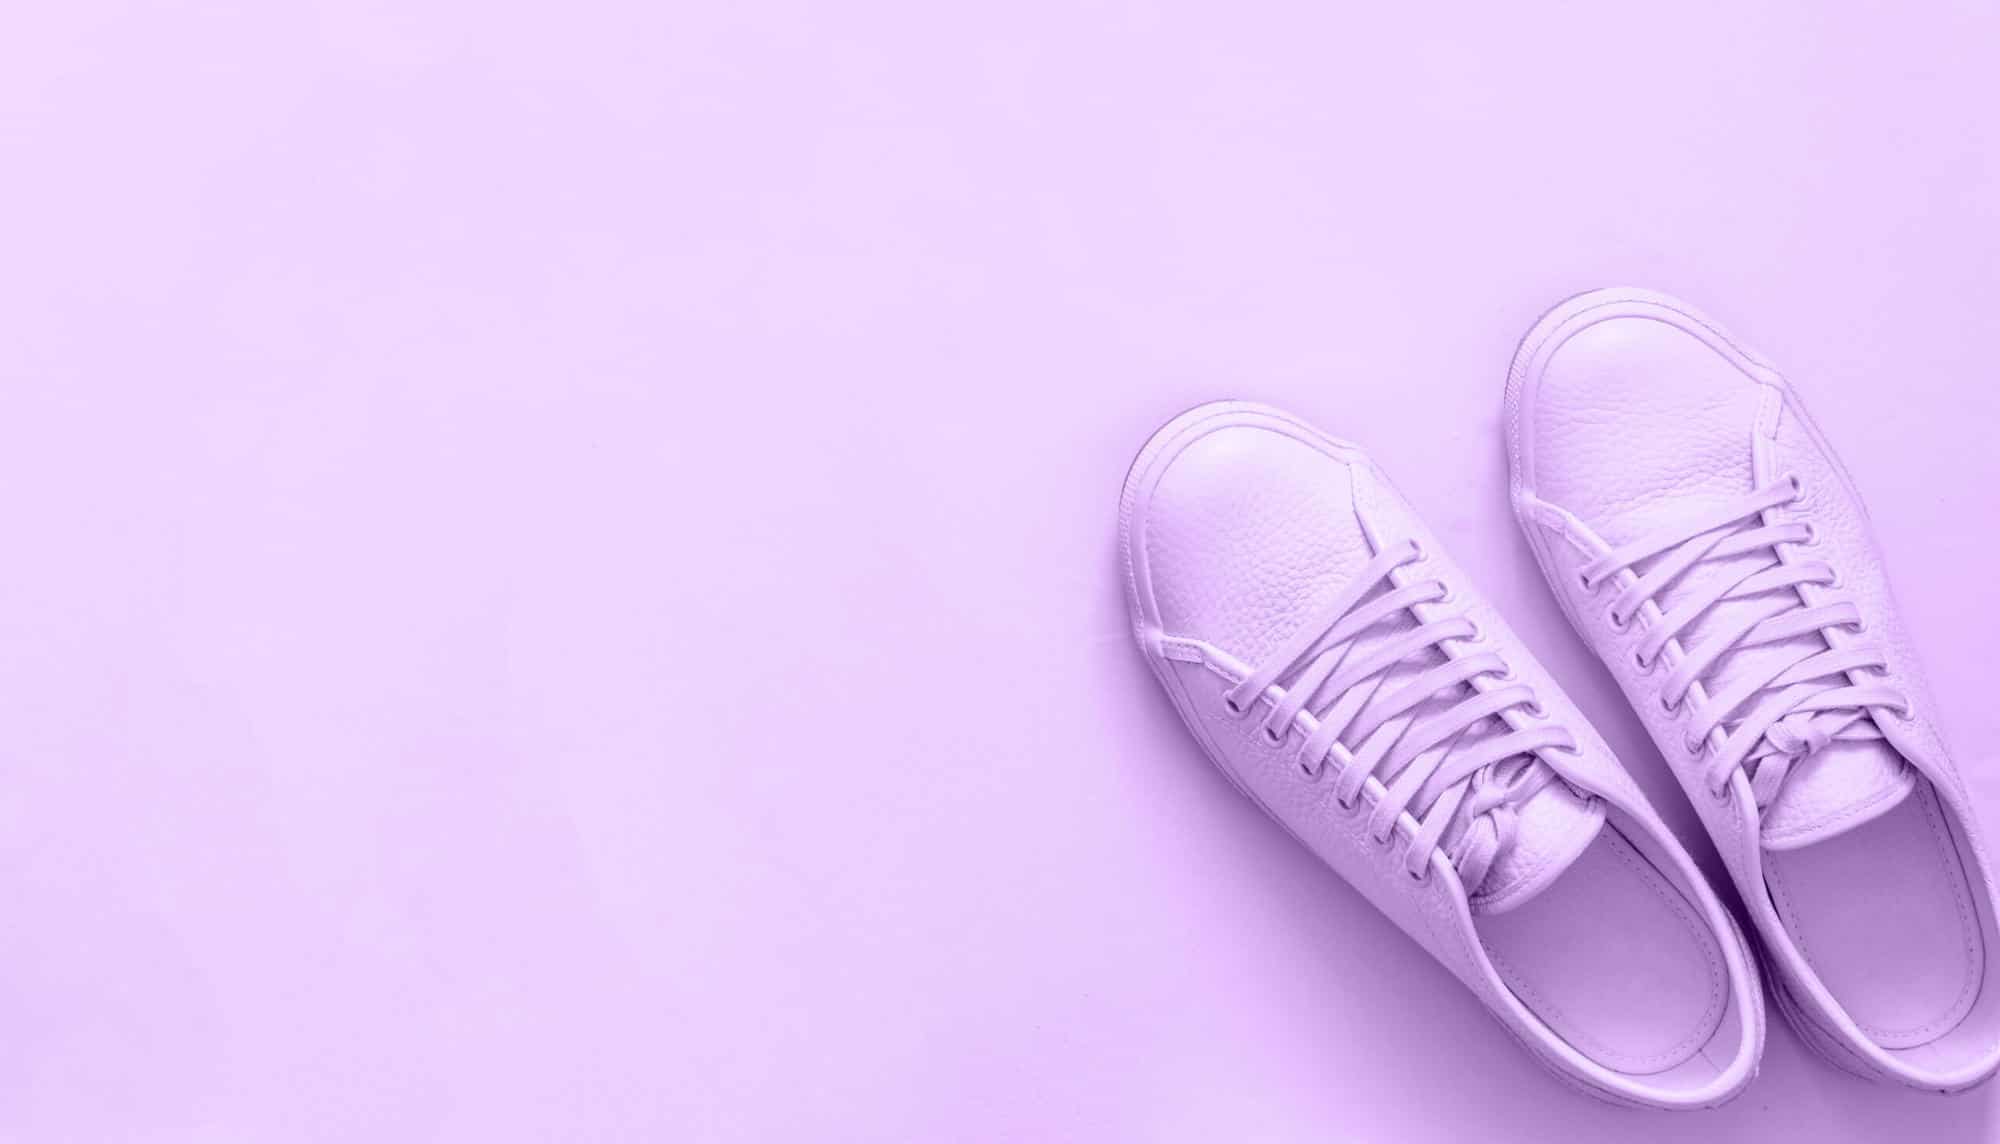 violet-sneakers-on-violet-background-copy-space-CZ6RM3U-scaled.jpg